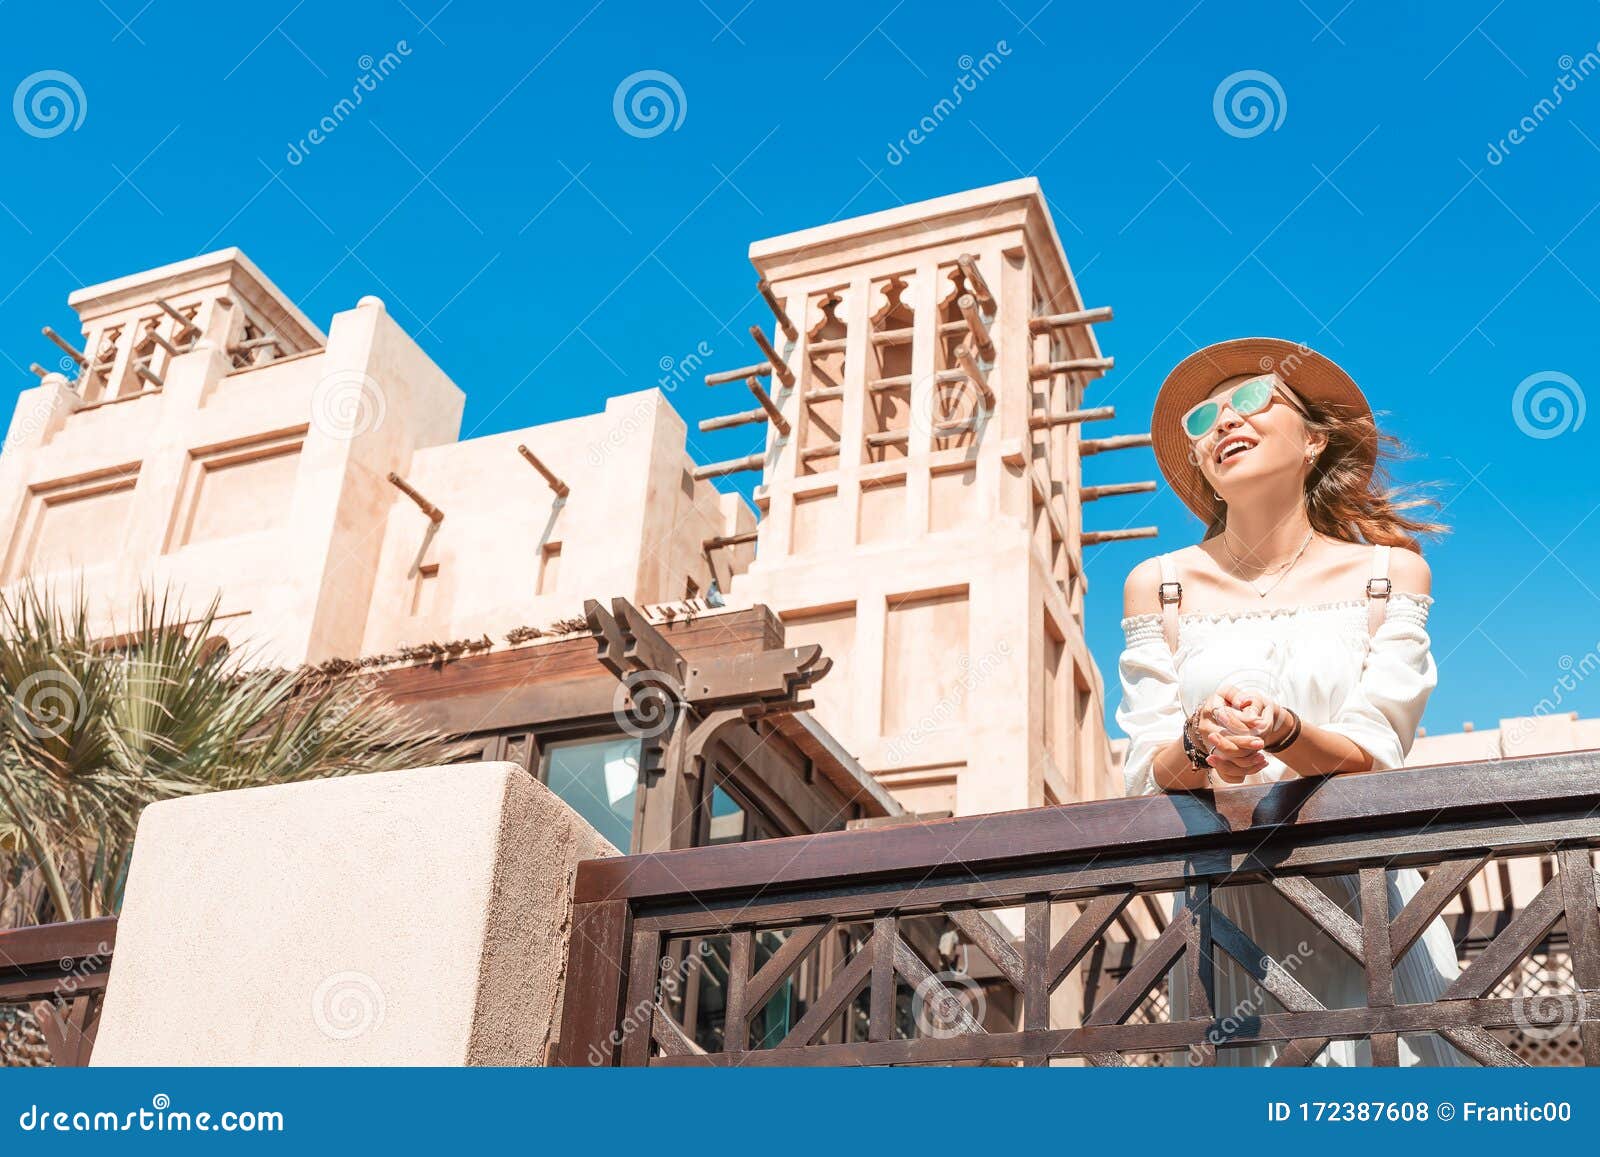 asian tourist girl walks through the old arab city in dubai, united arab emirates